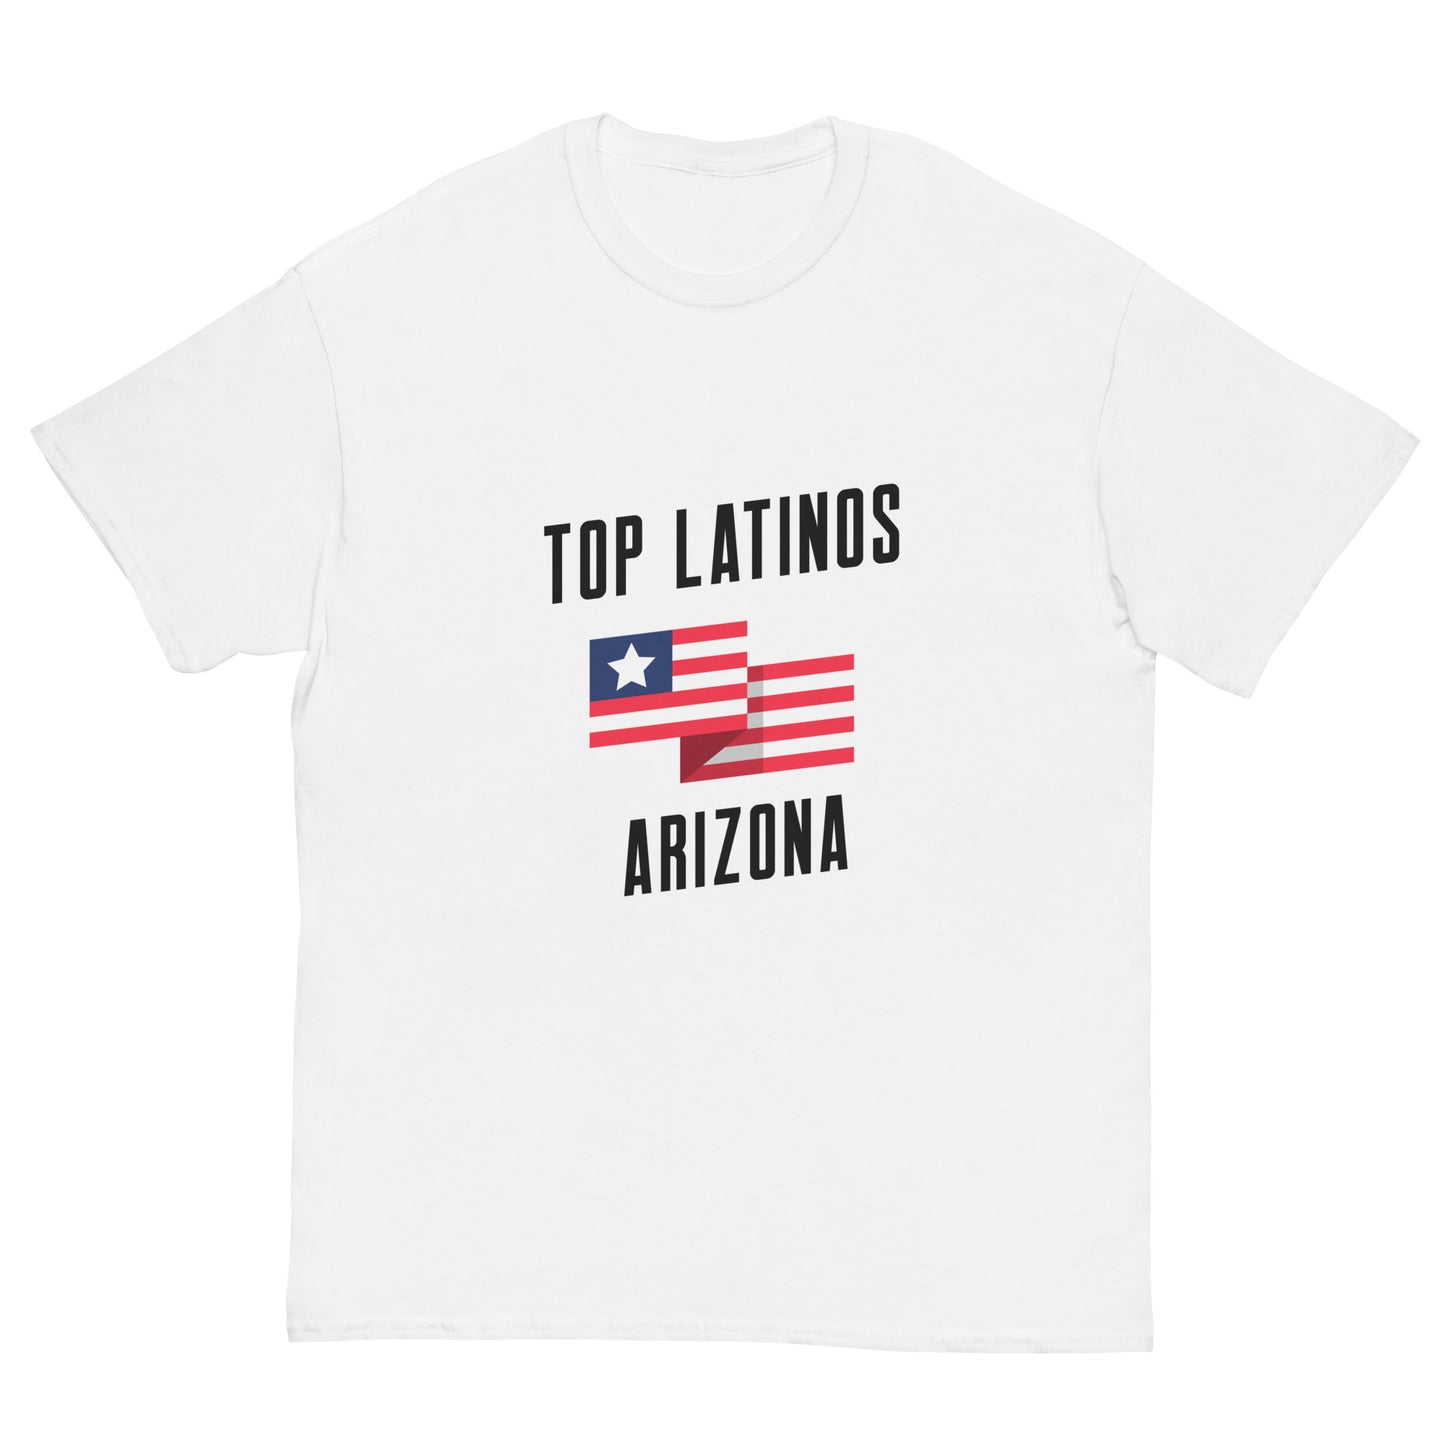 Top Latinos Arizona classic tee